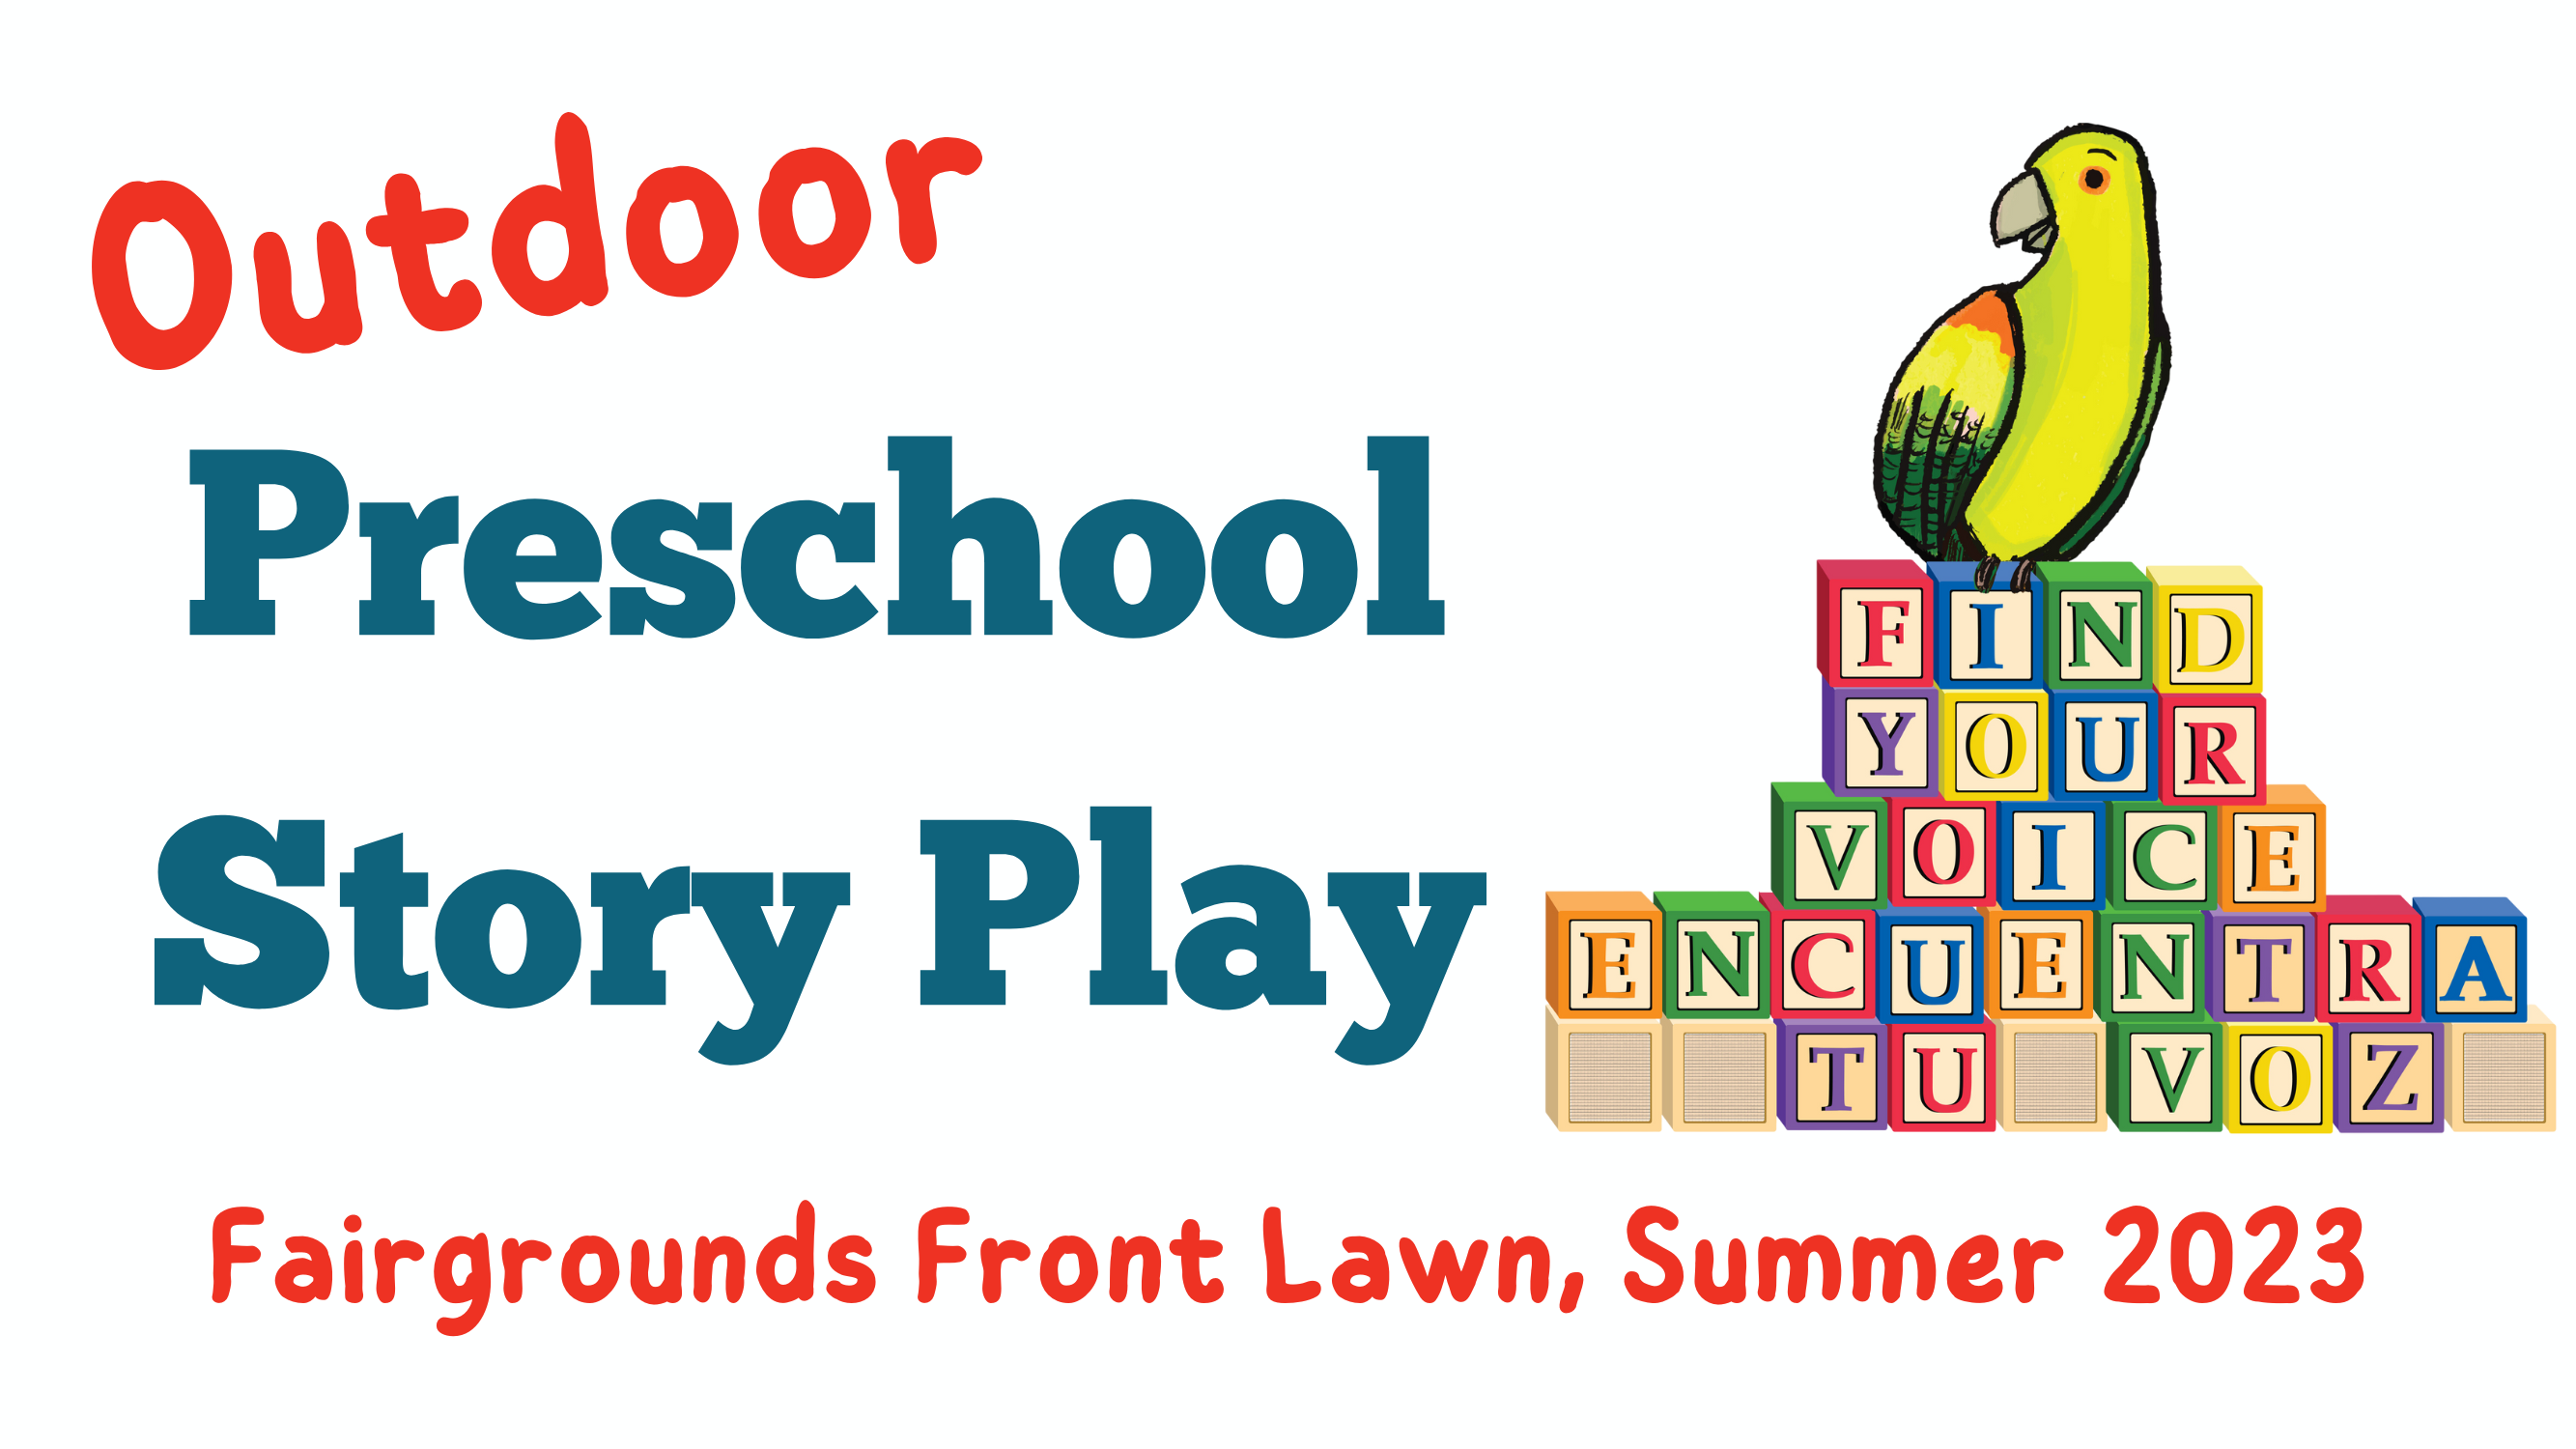 Outdoor Preschool Story Play Image